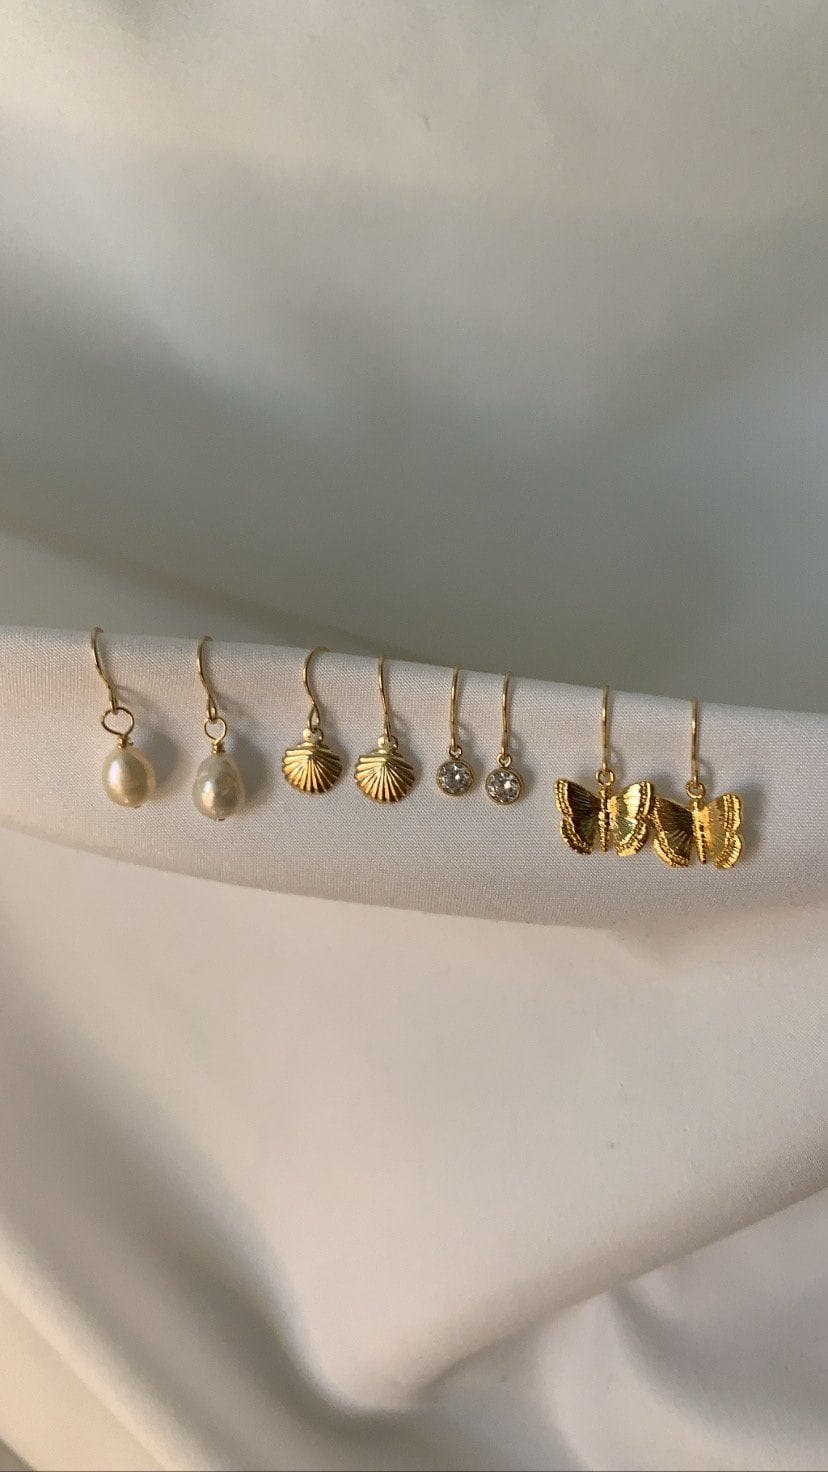 Mini Seashell Dangle Earrings - Jewelers Garden